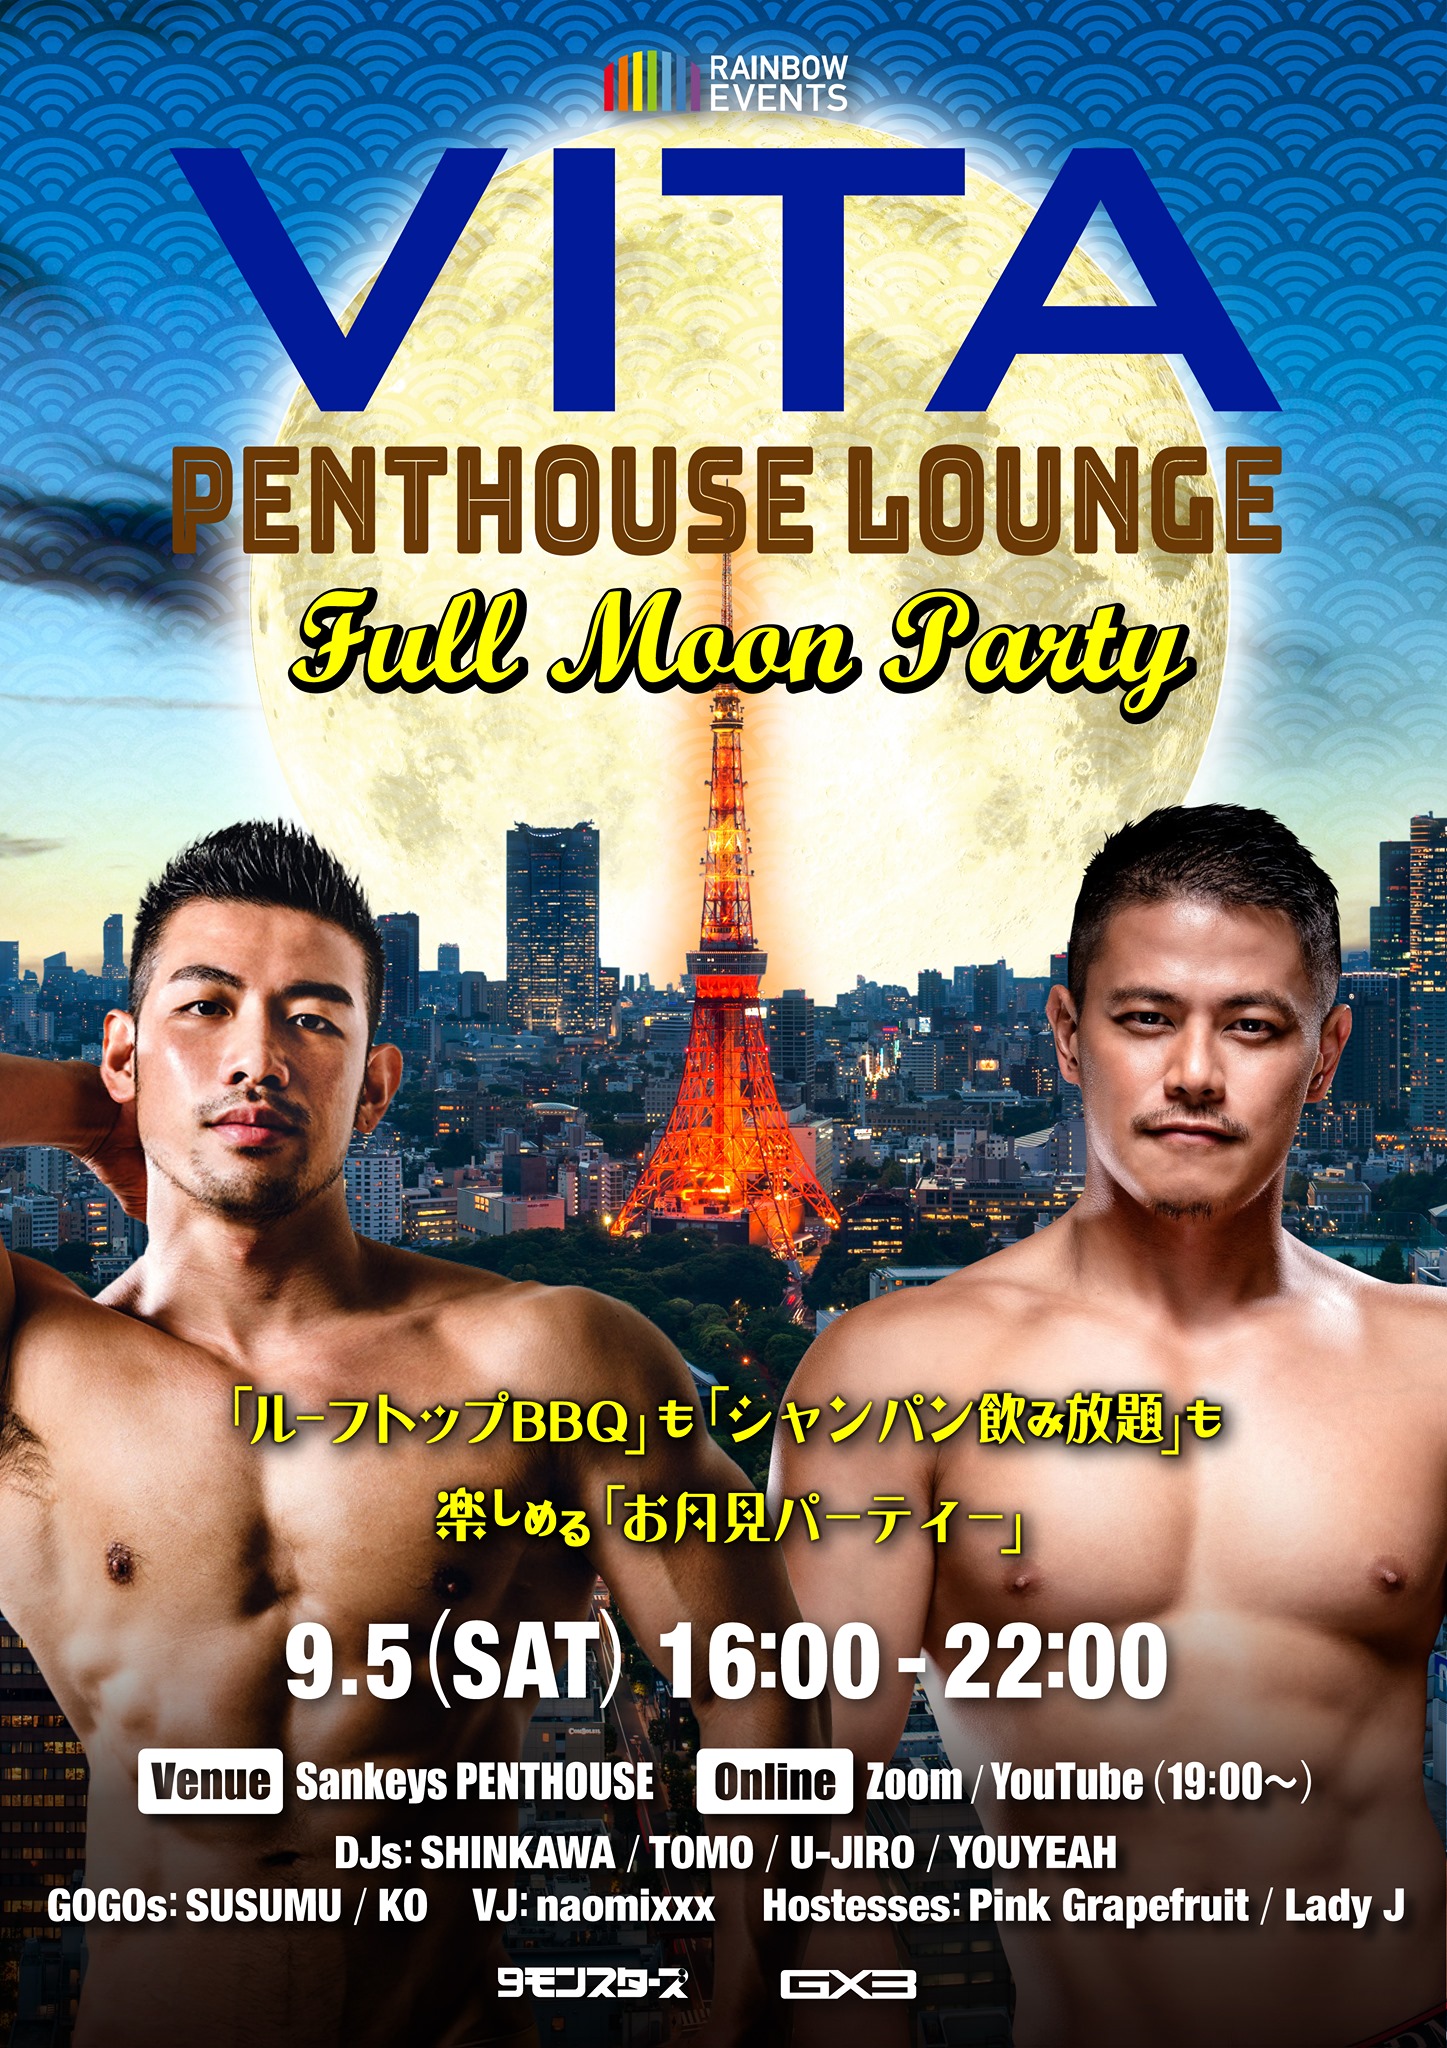 Full Moon Party -VITA Penthouse Lounge-